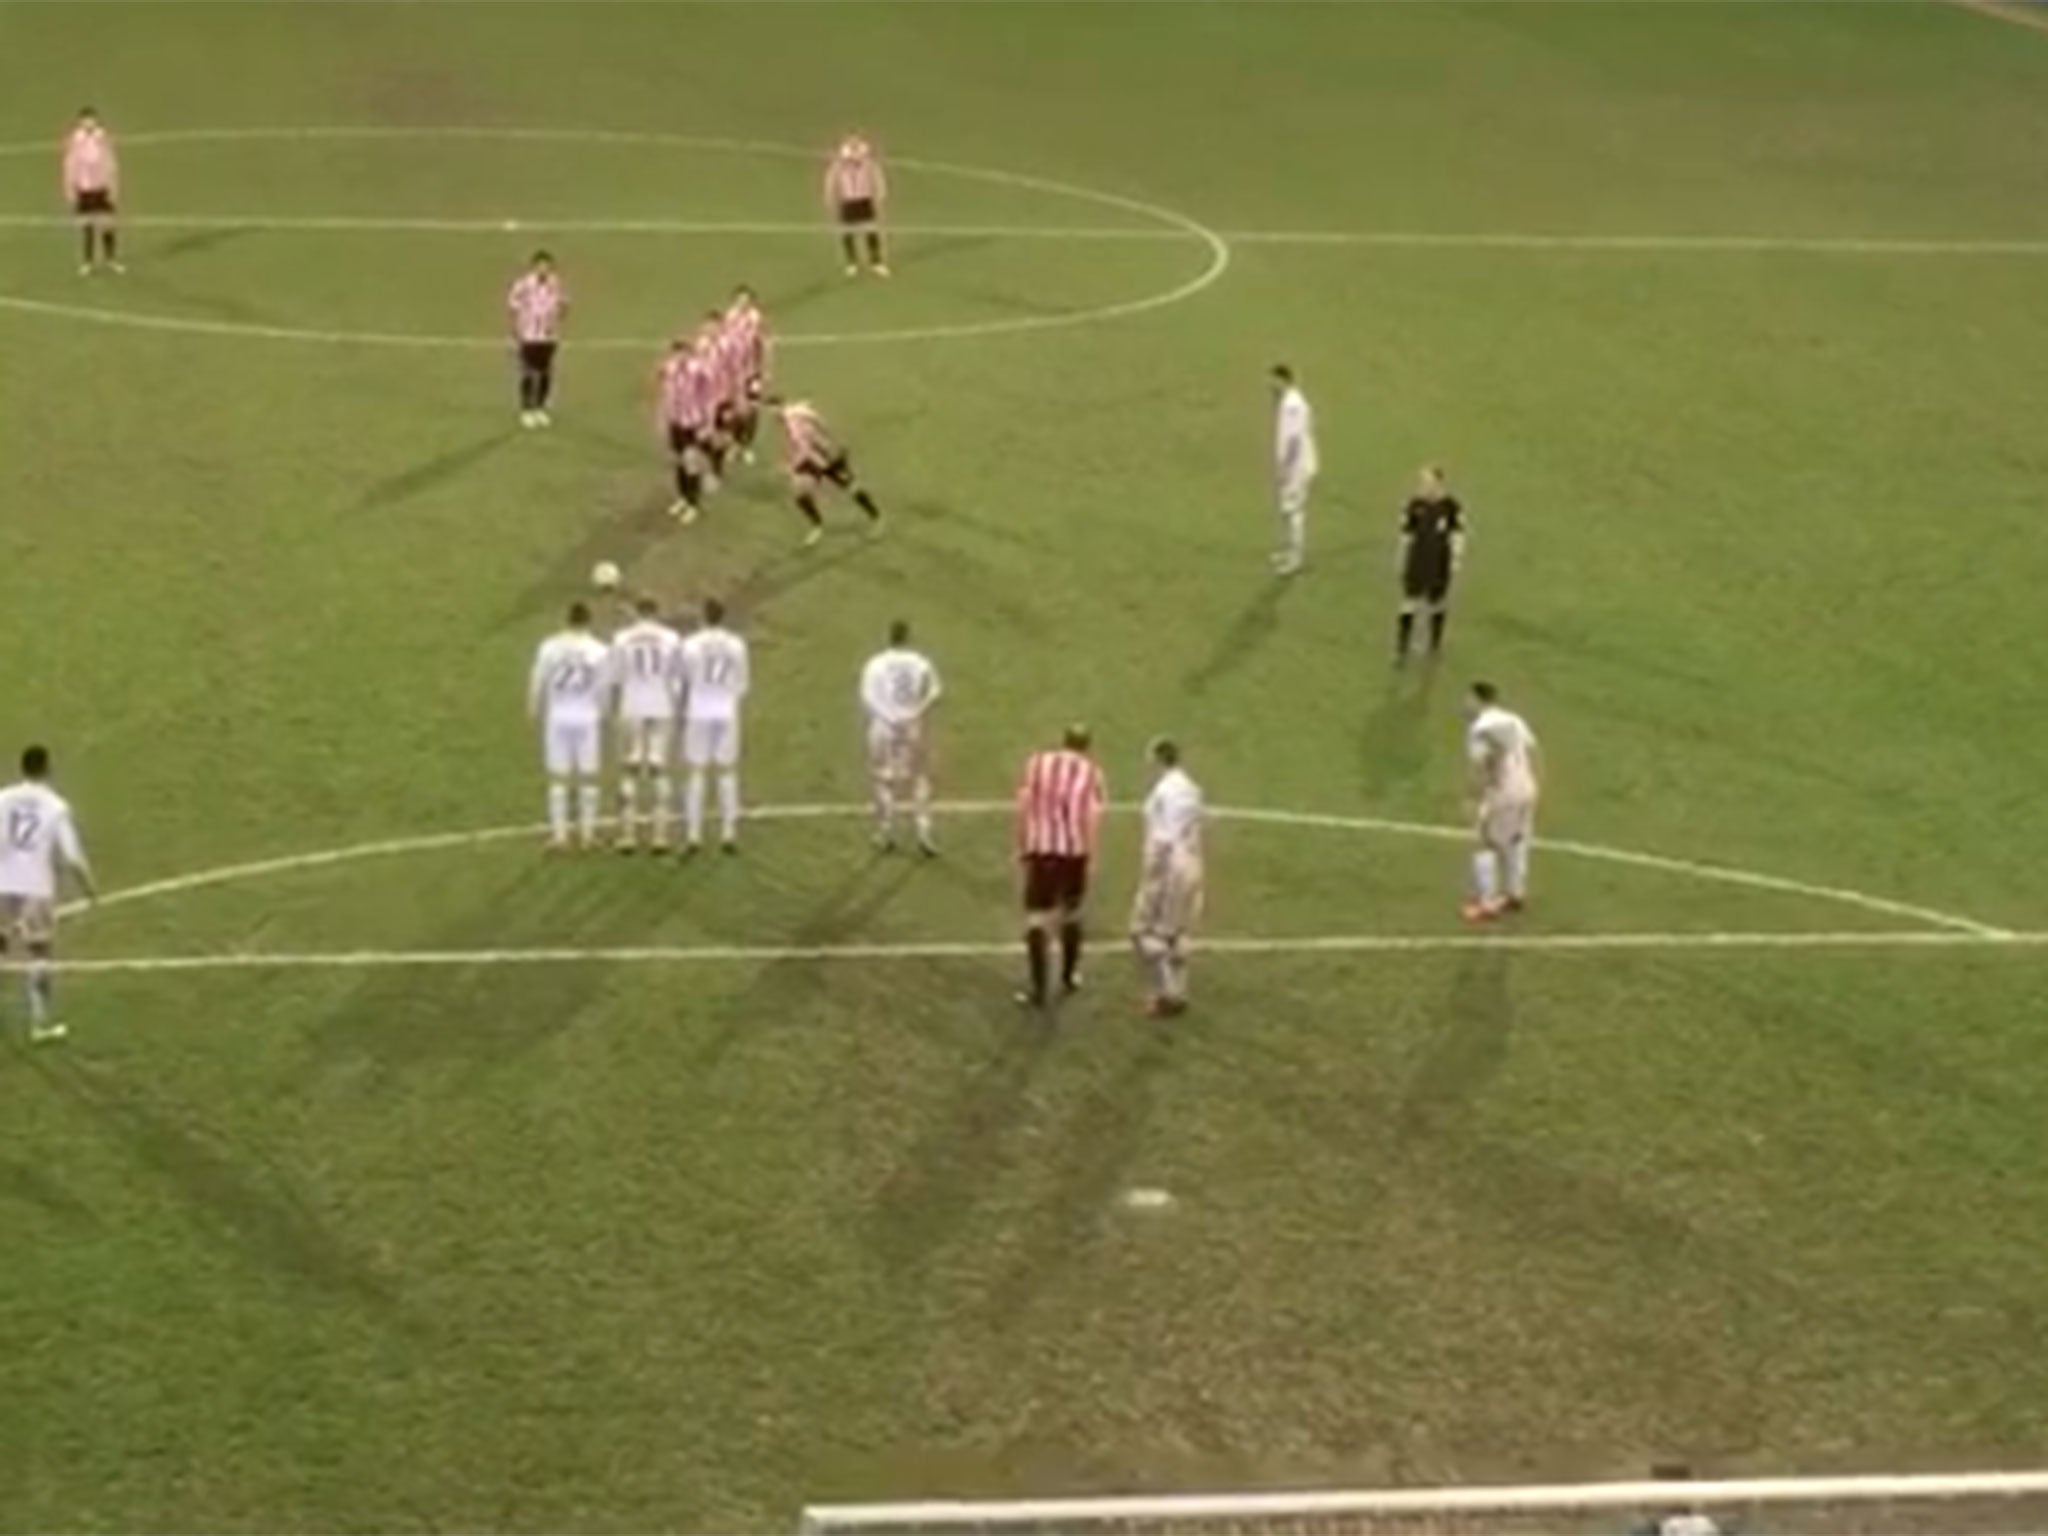 Five Cheltenham players line up to take the free-kick